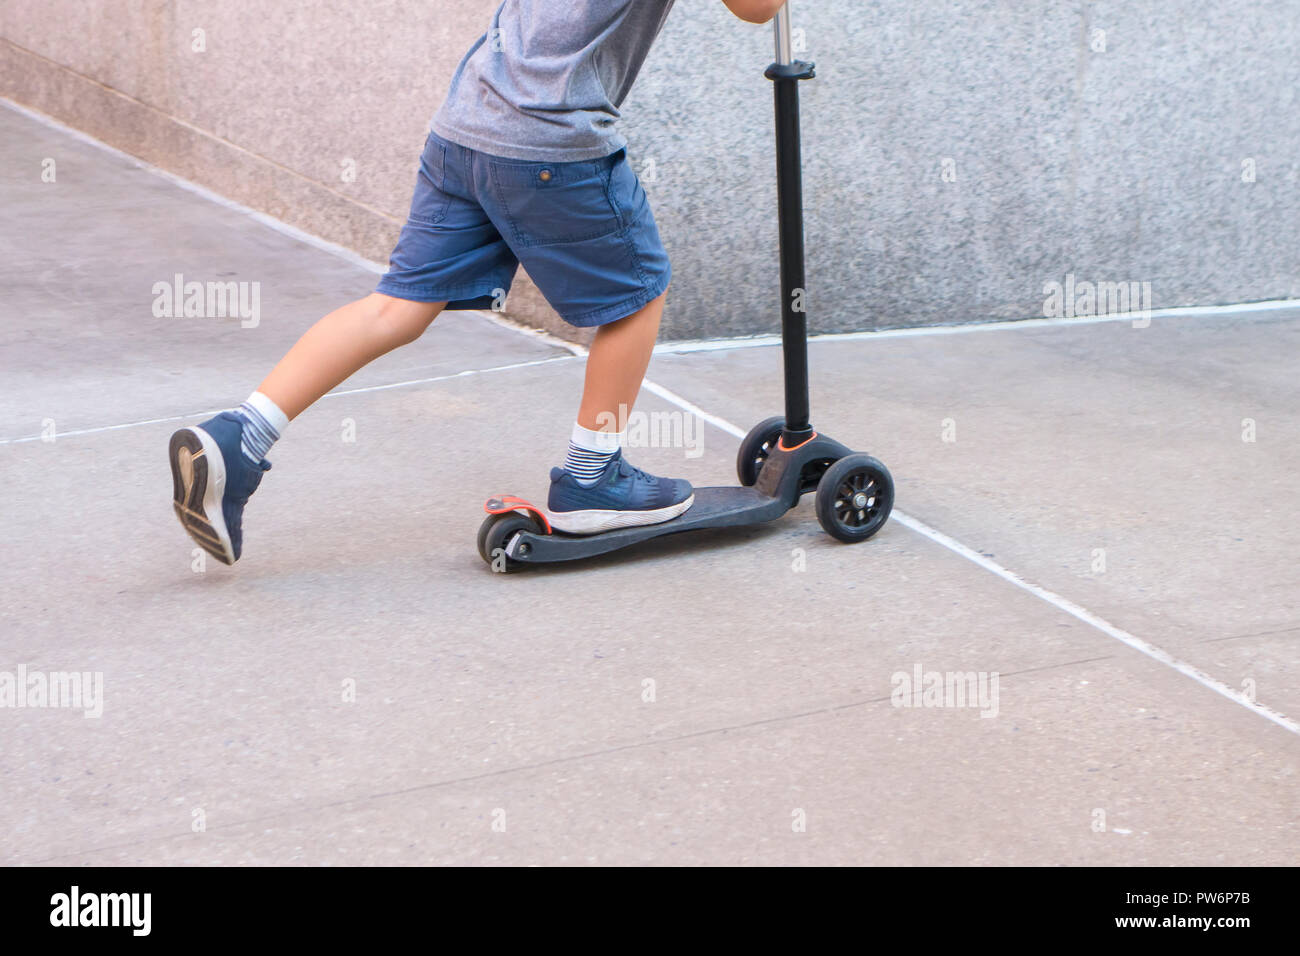 Boy on a plastic 3 wheel mini scooter on a urban sidewalk Stock Photo